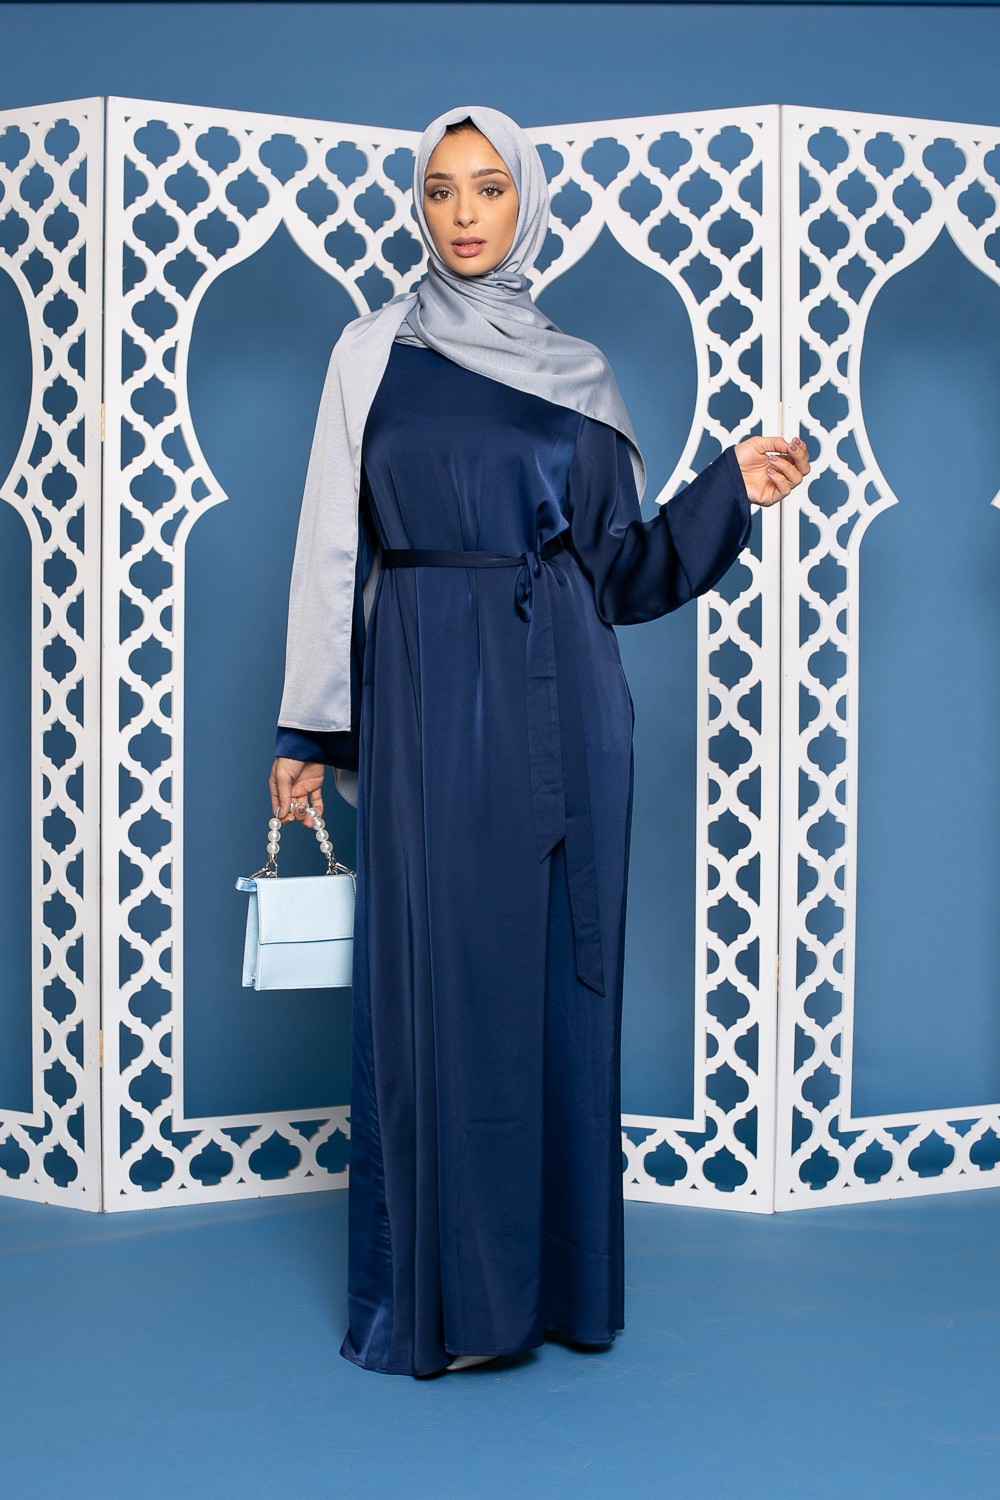 Dark blue satin luxery abaya